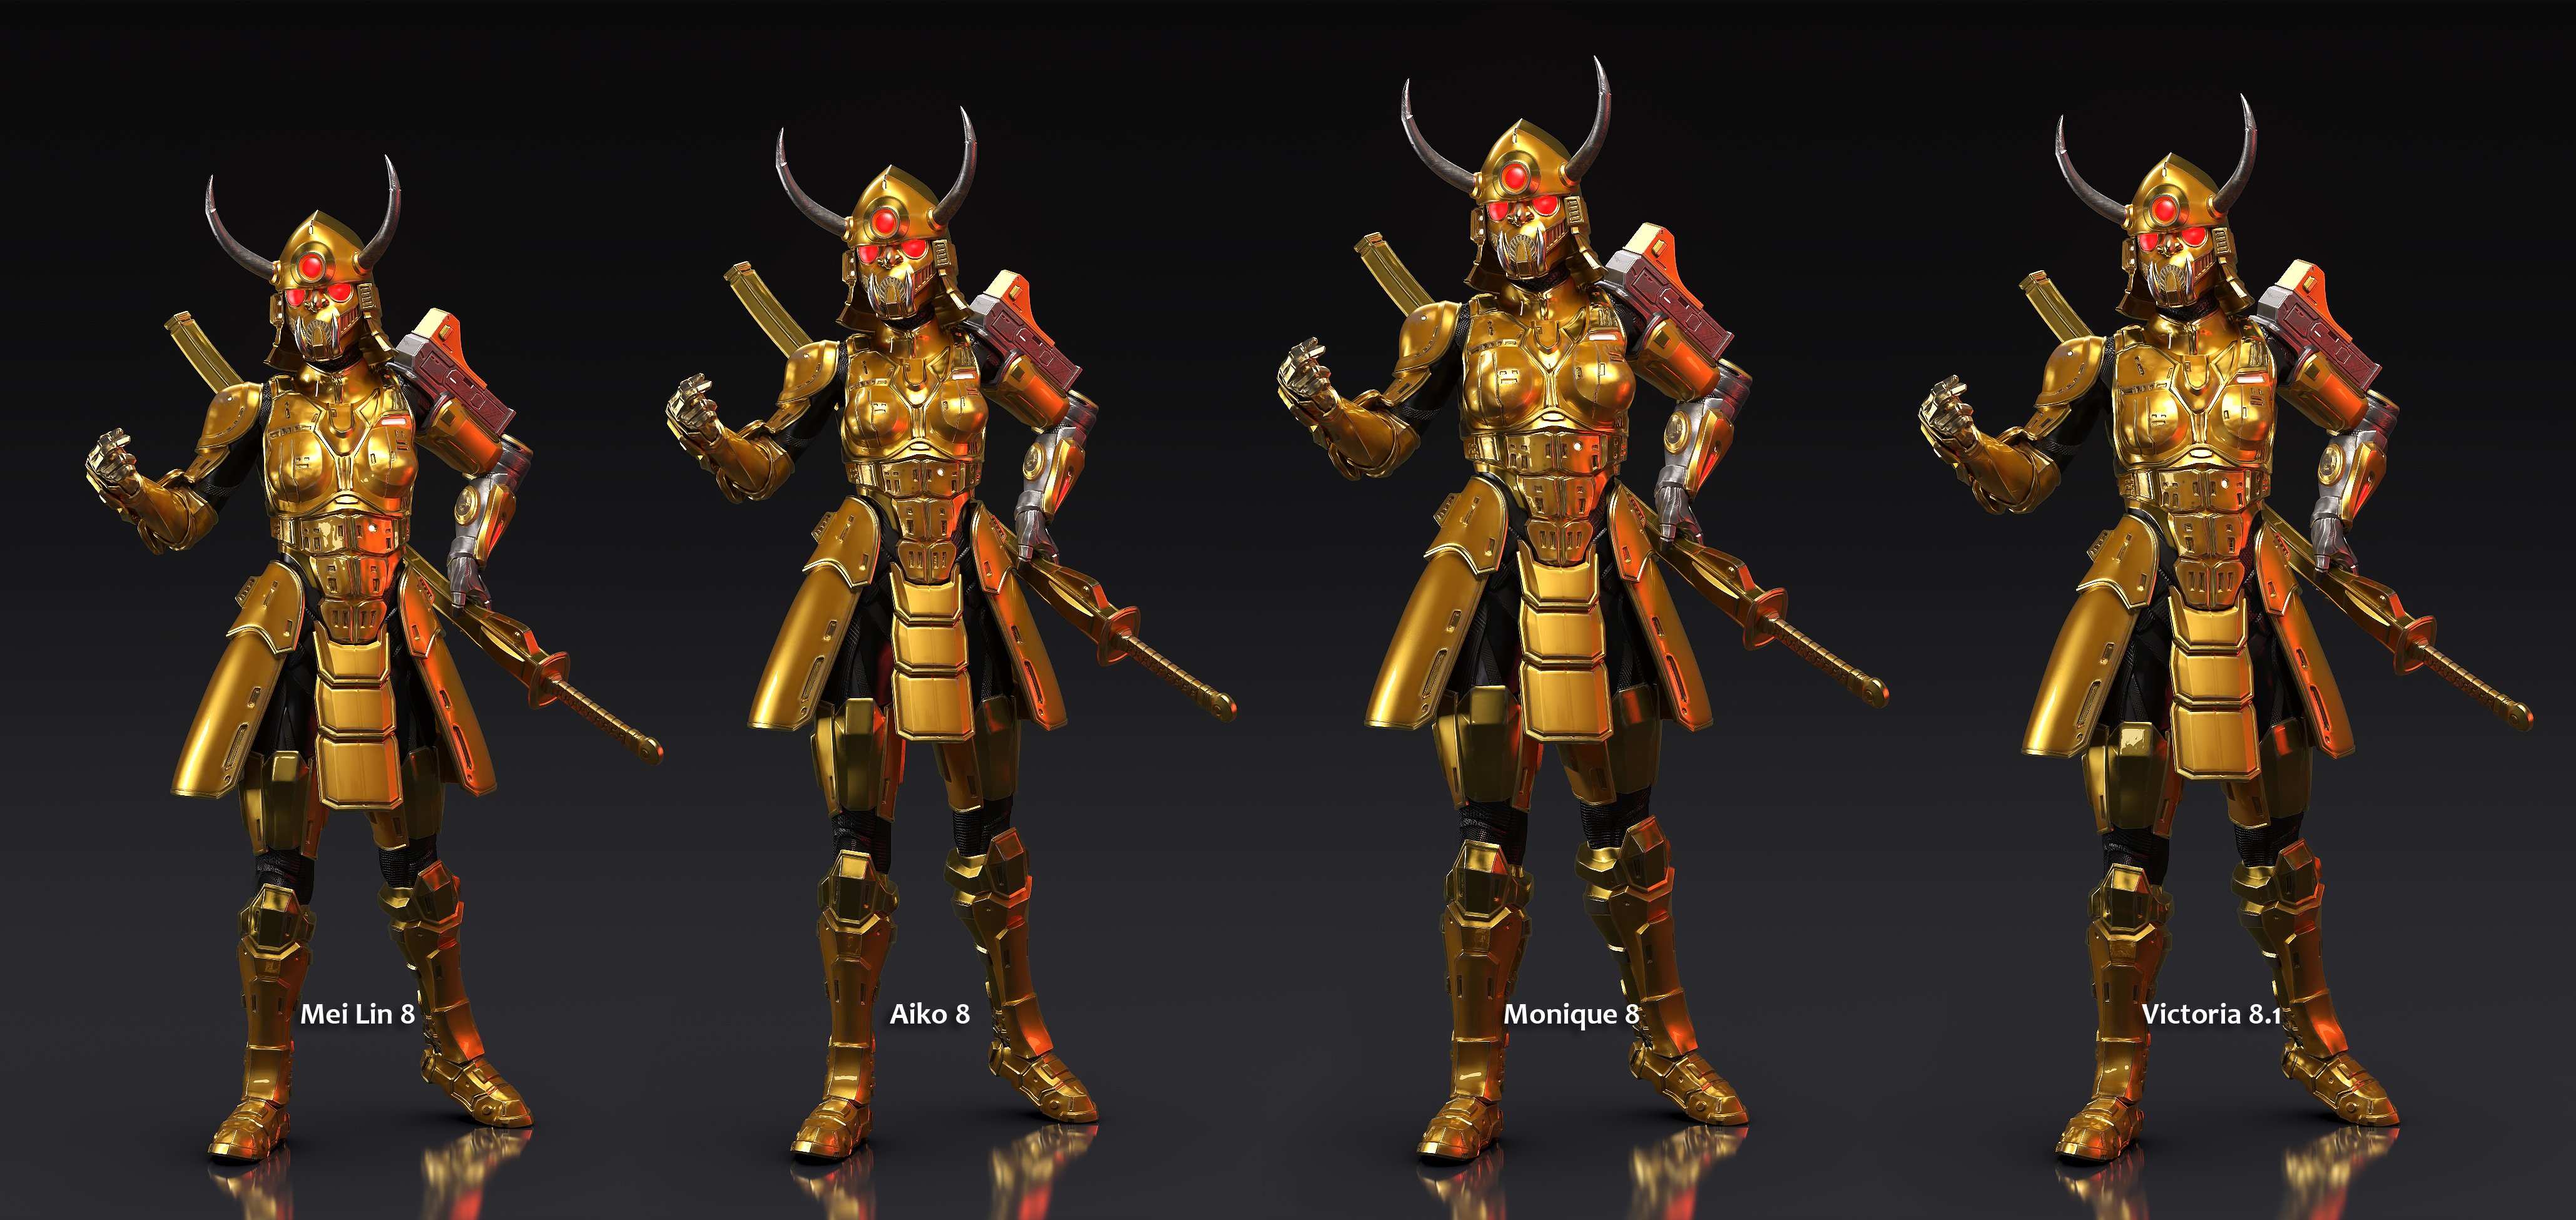 Samurai Cyberpunk Armor for Genesis 8.1 Female and Noska 8.1 by: Jerry Jang, 3D Models by Daz 3D